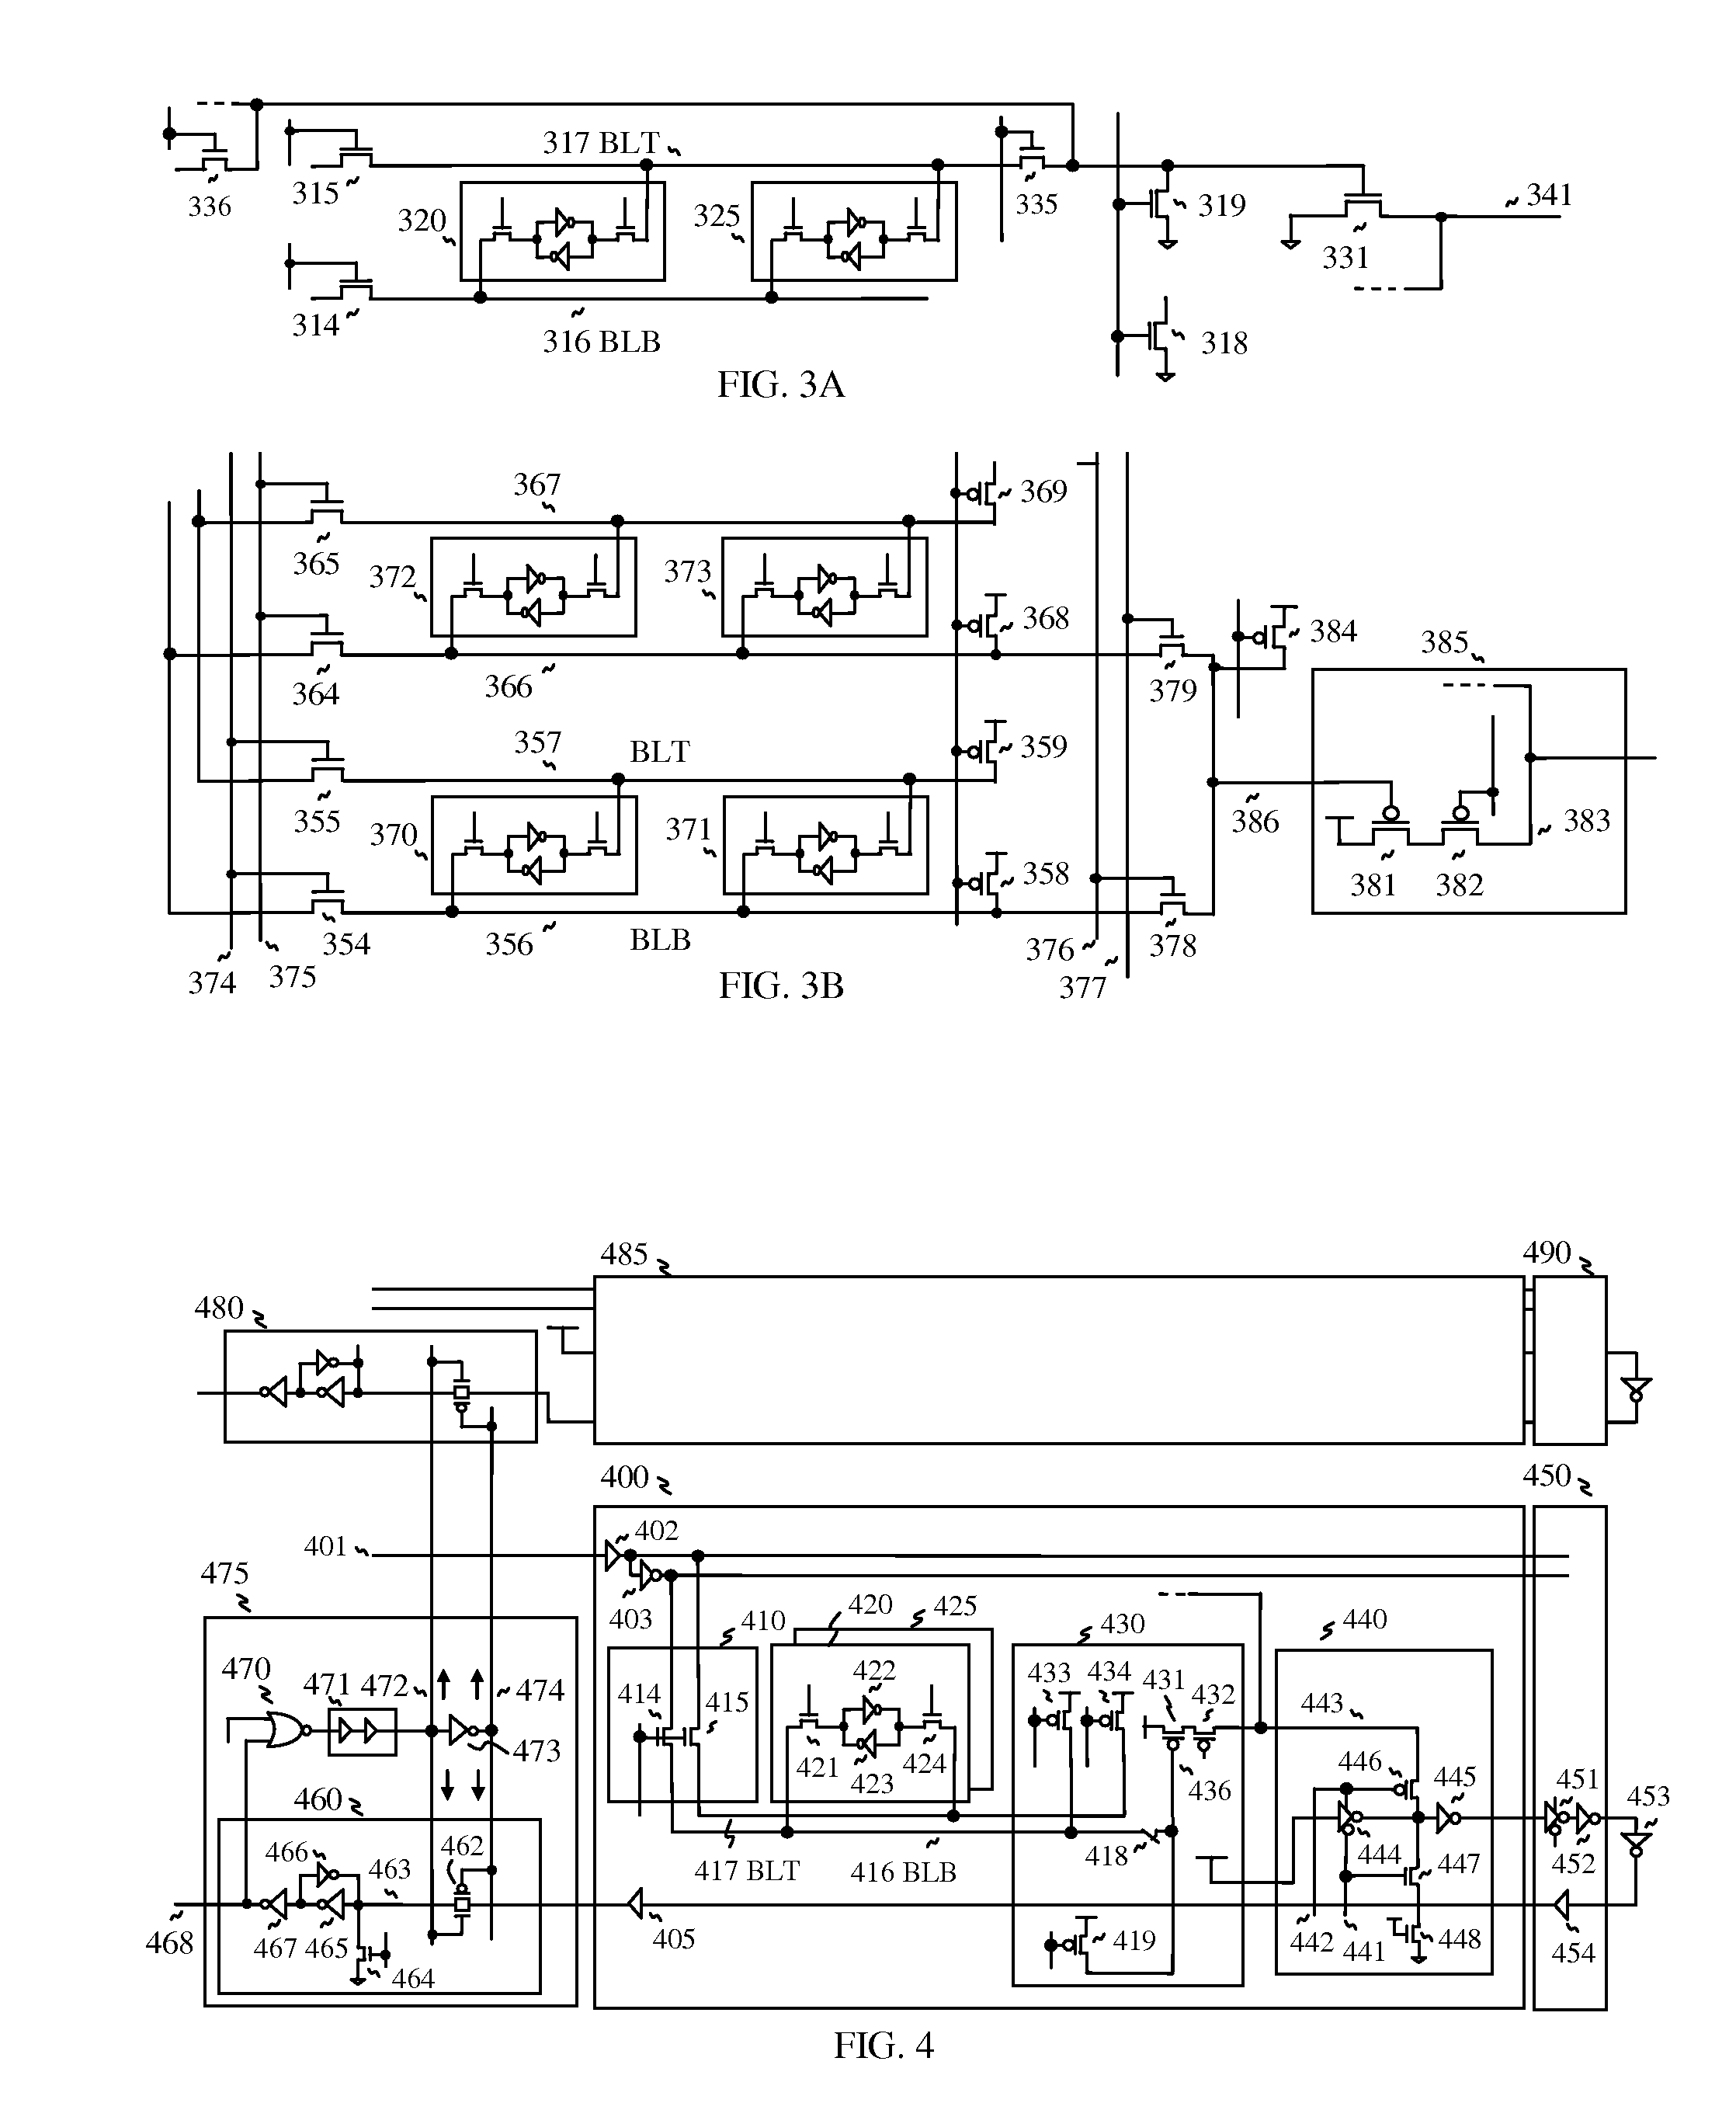 SRAM including bottom gate transistor